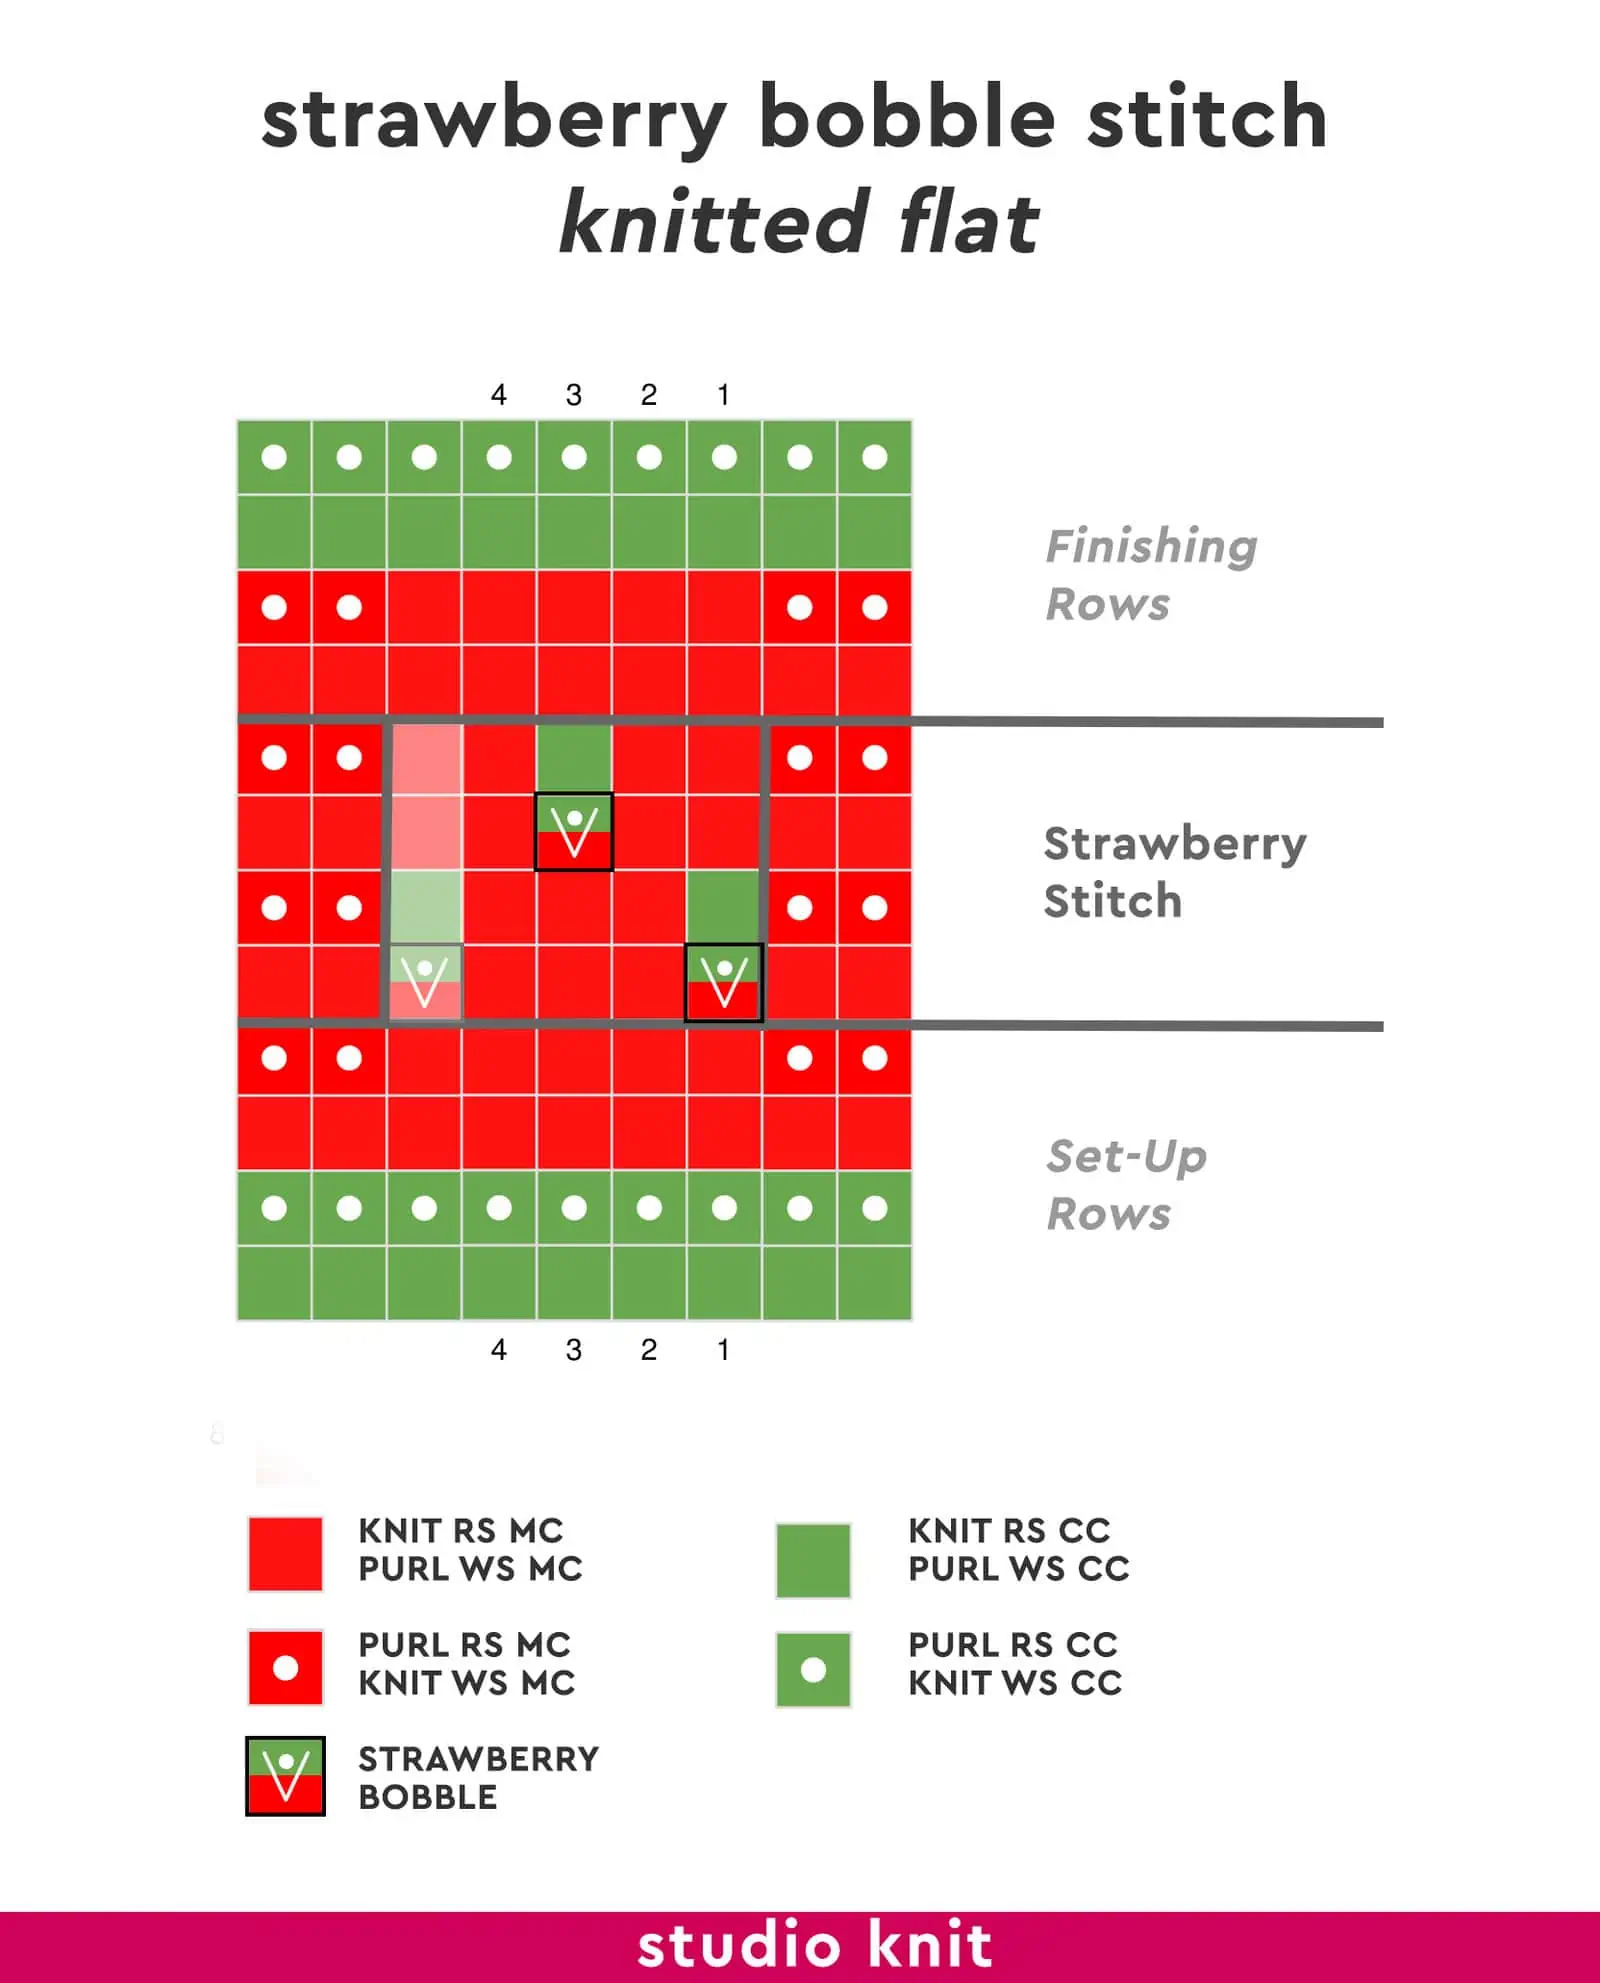 Knitting chart of the Strawberry Bobble Stitch knitted flat by Studio Knit.